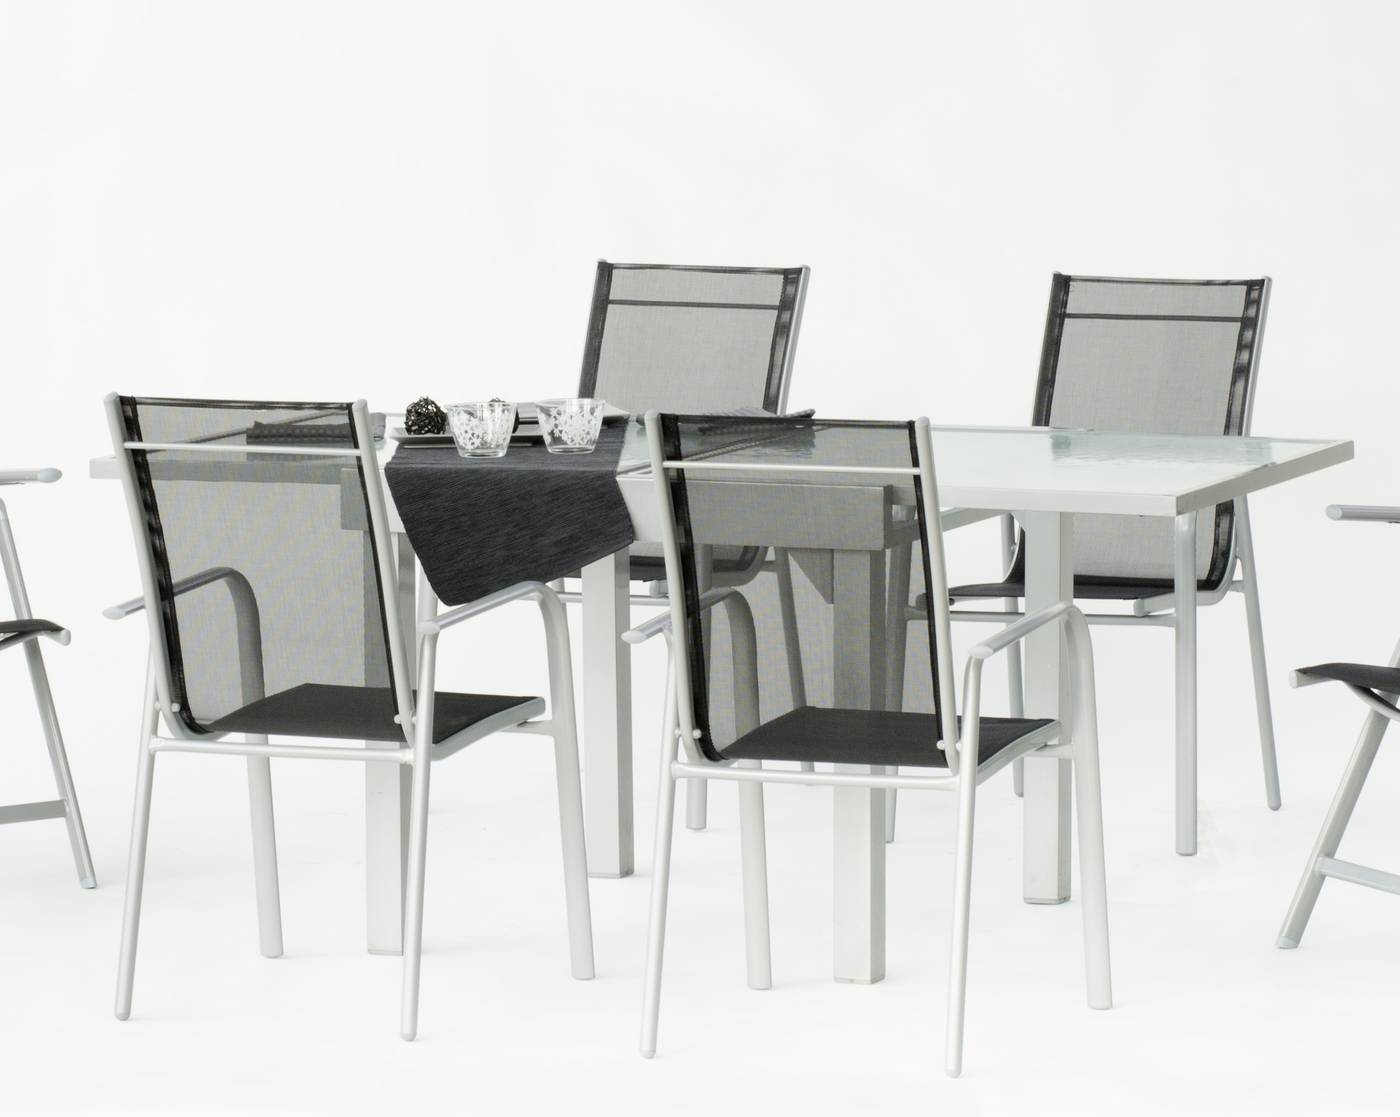 Set Aluminio Mantua Ext. - Conjunto aluminio color plata: mesa extensible y 4 sillones apilables